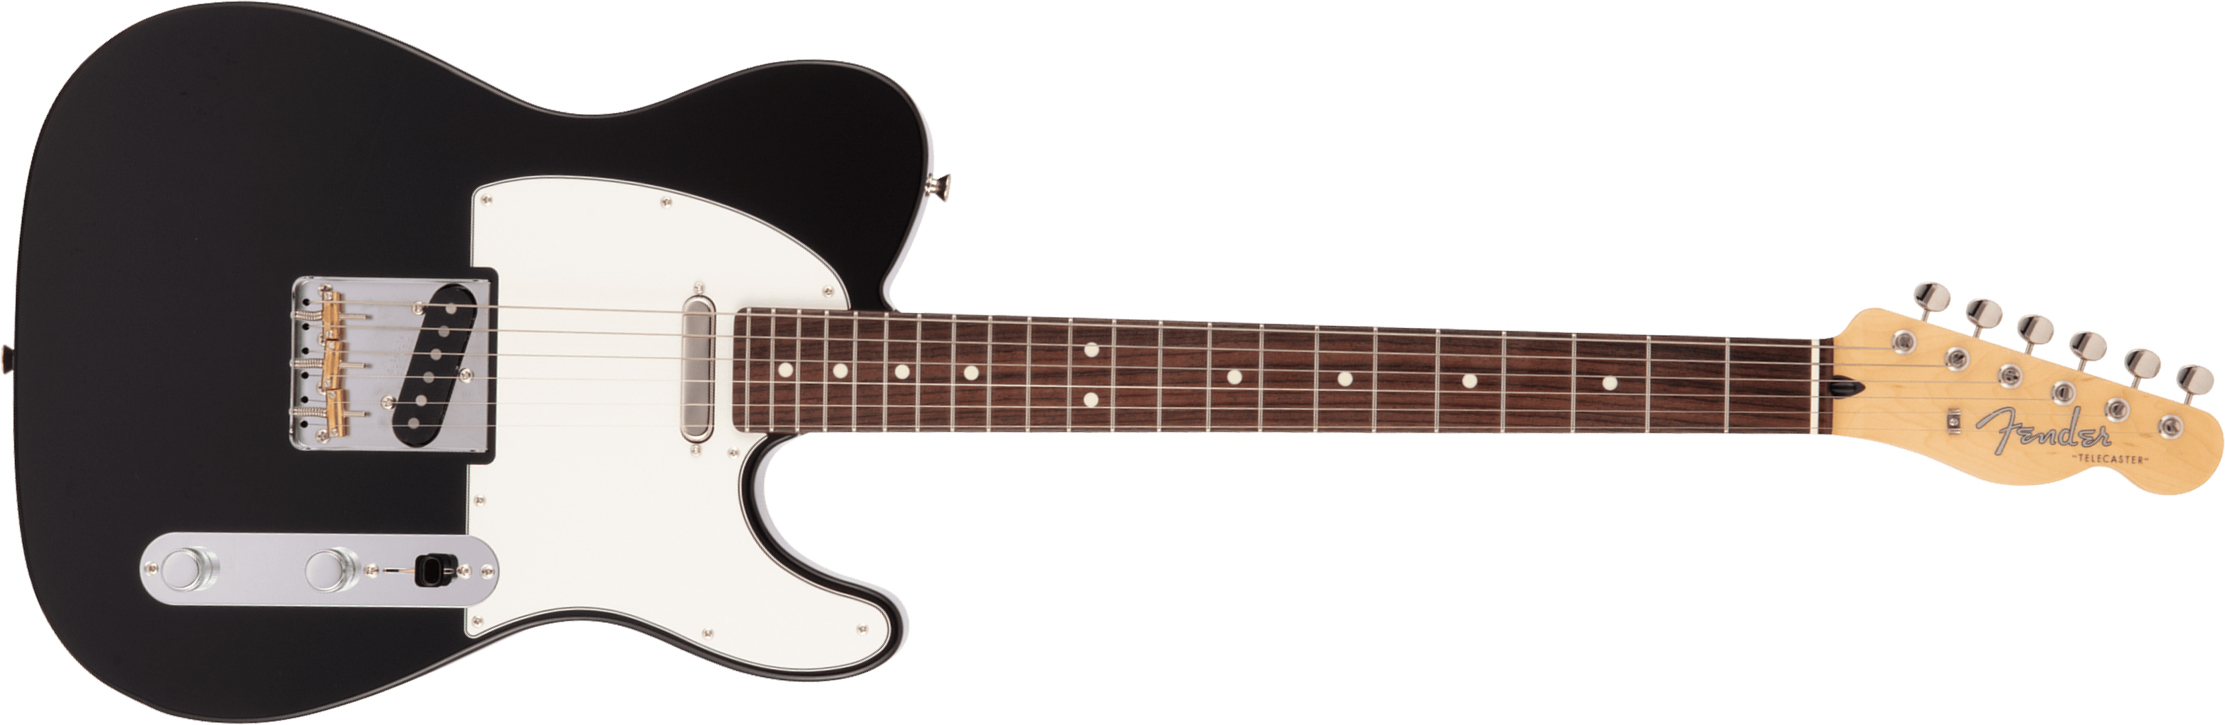 Fender Tele Hybrid Ii Jap 2s Ht Mn - Black - Televorm elektrische gitaar - Main picture